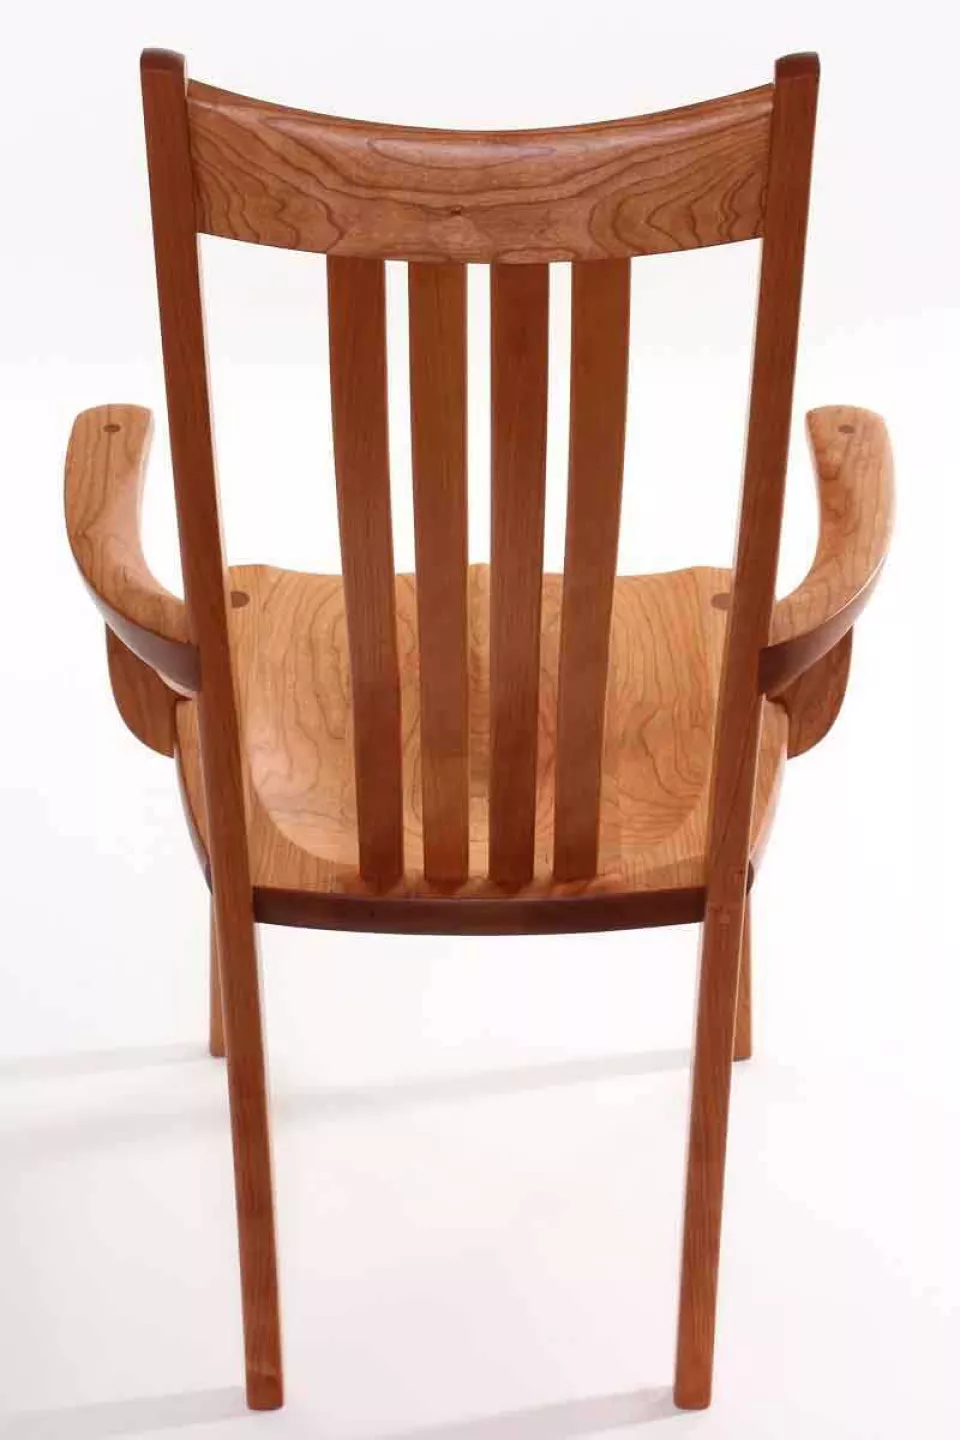 Wilson arm chair back view